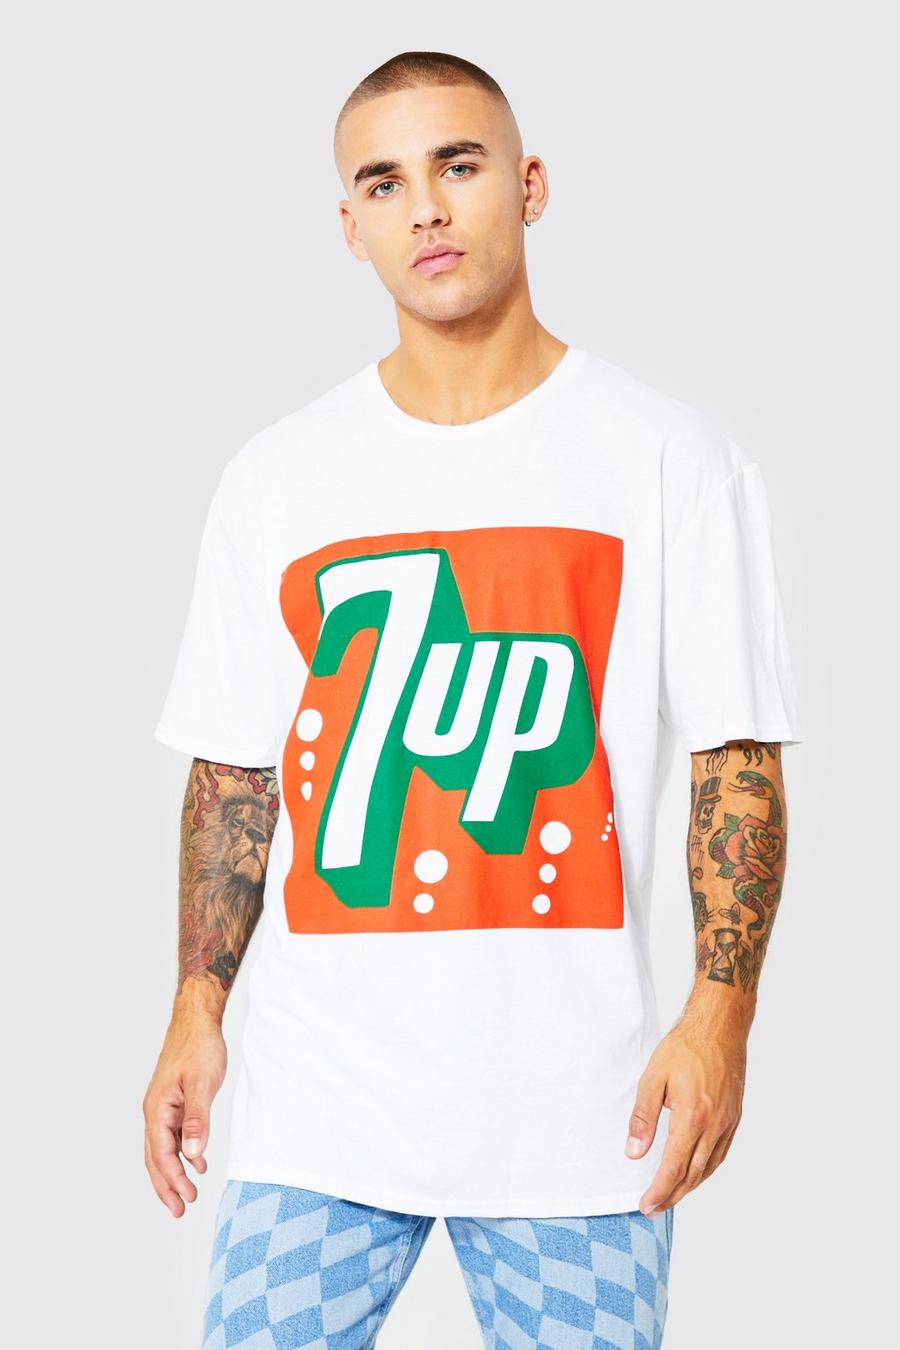 T-shirt oversize à slogan 7UP, White blanc